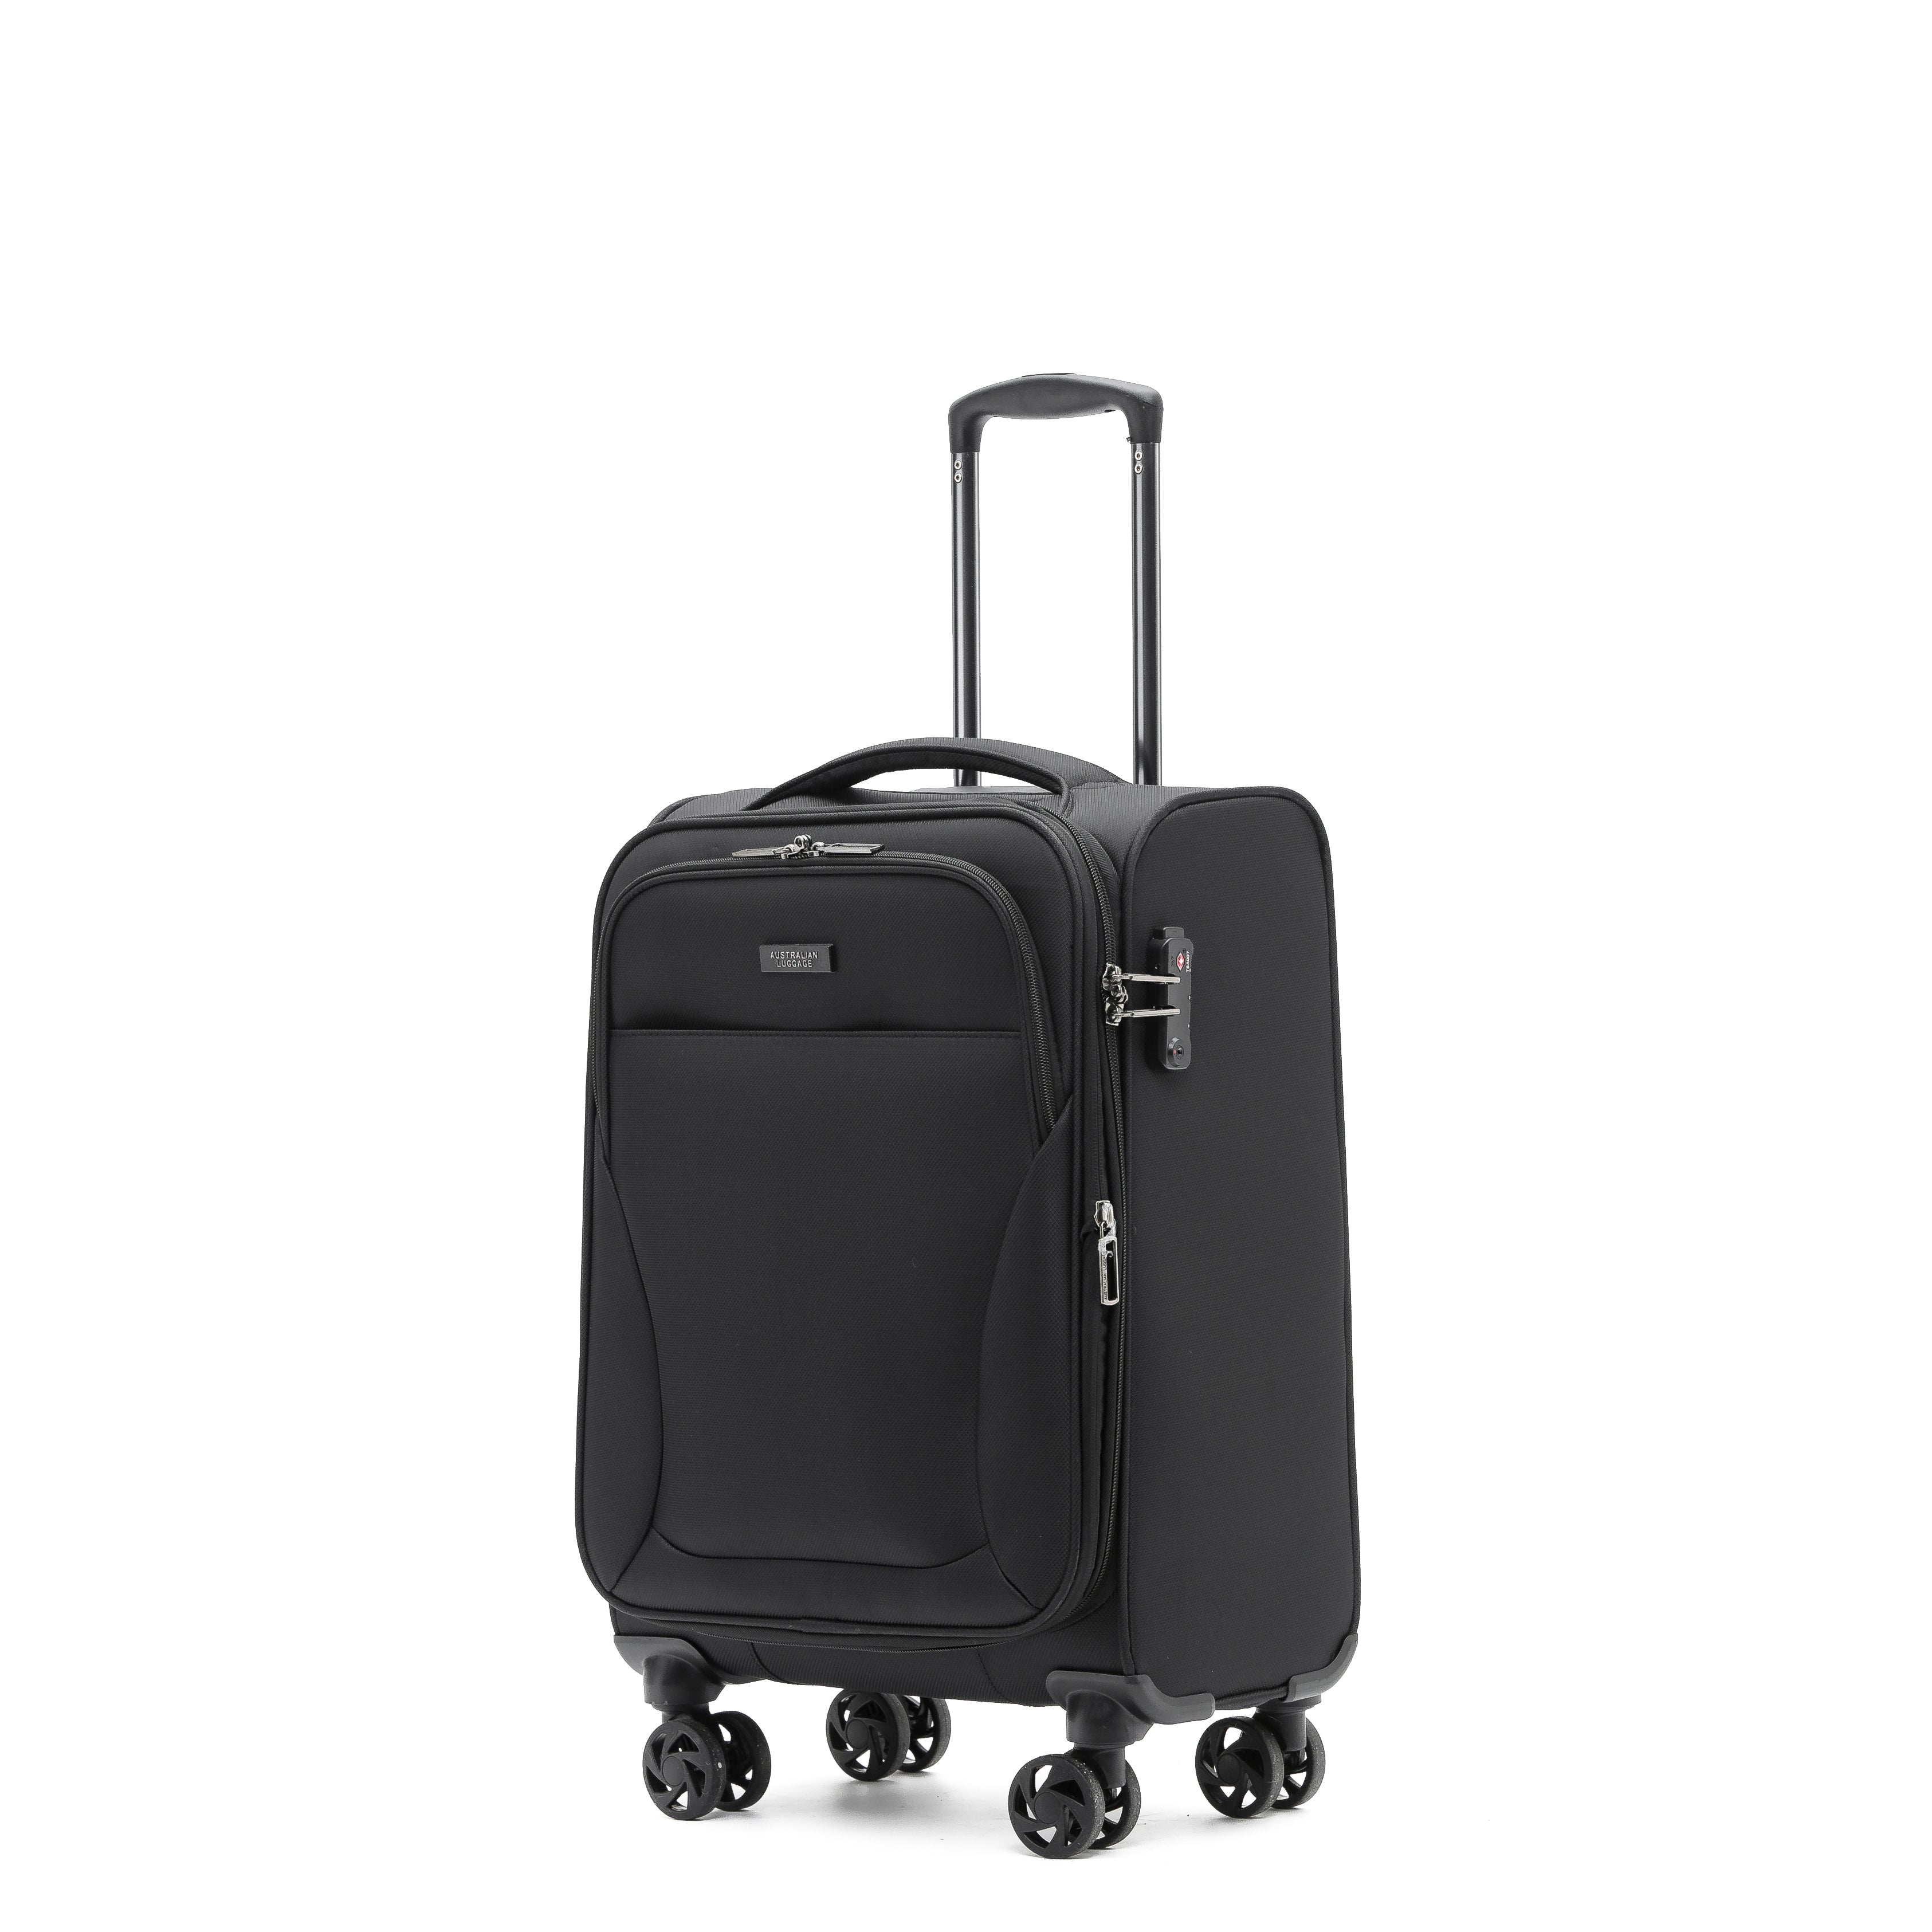 Aus Luggage - WINGS Set of 3 Suitcases - Black-8